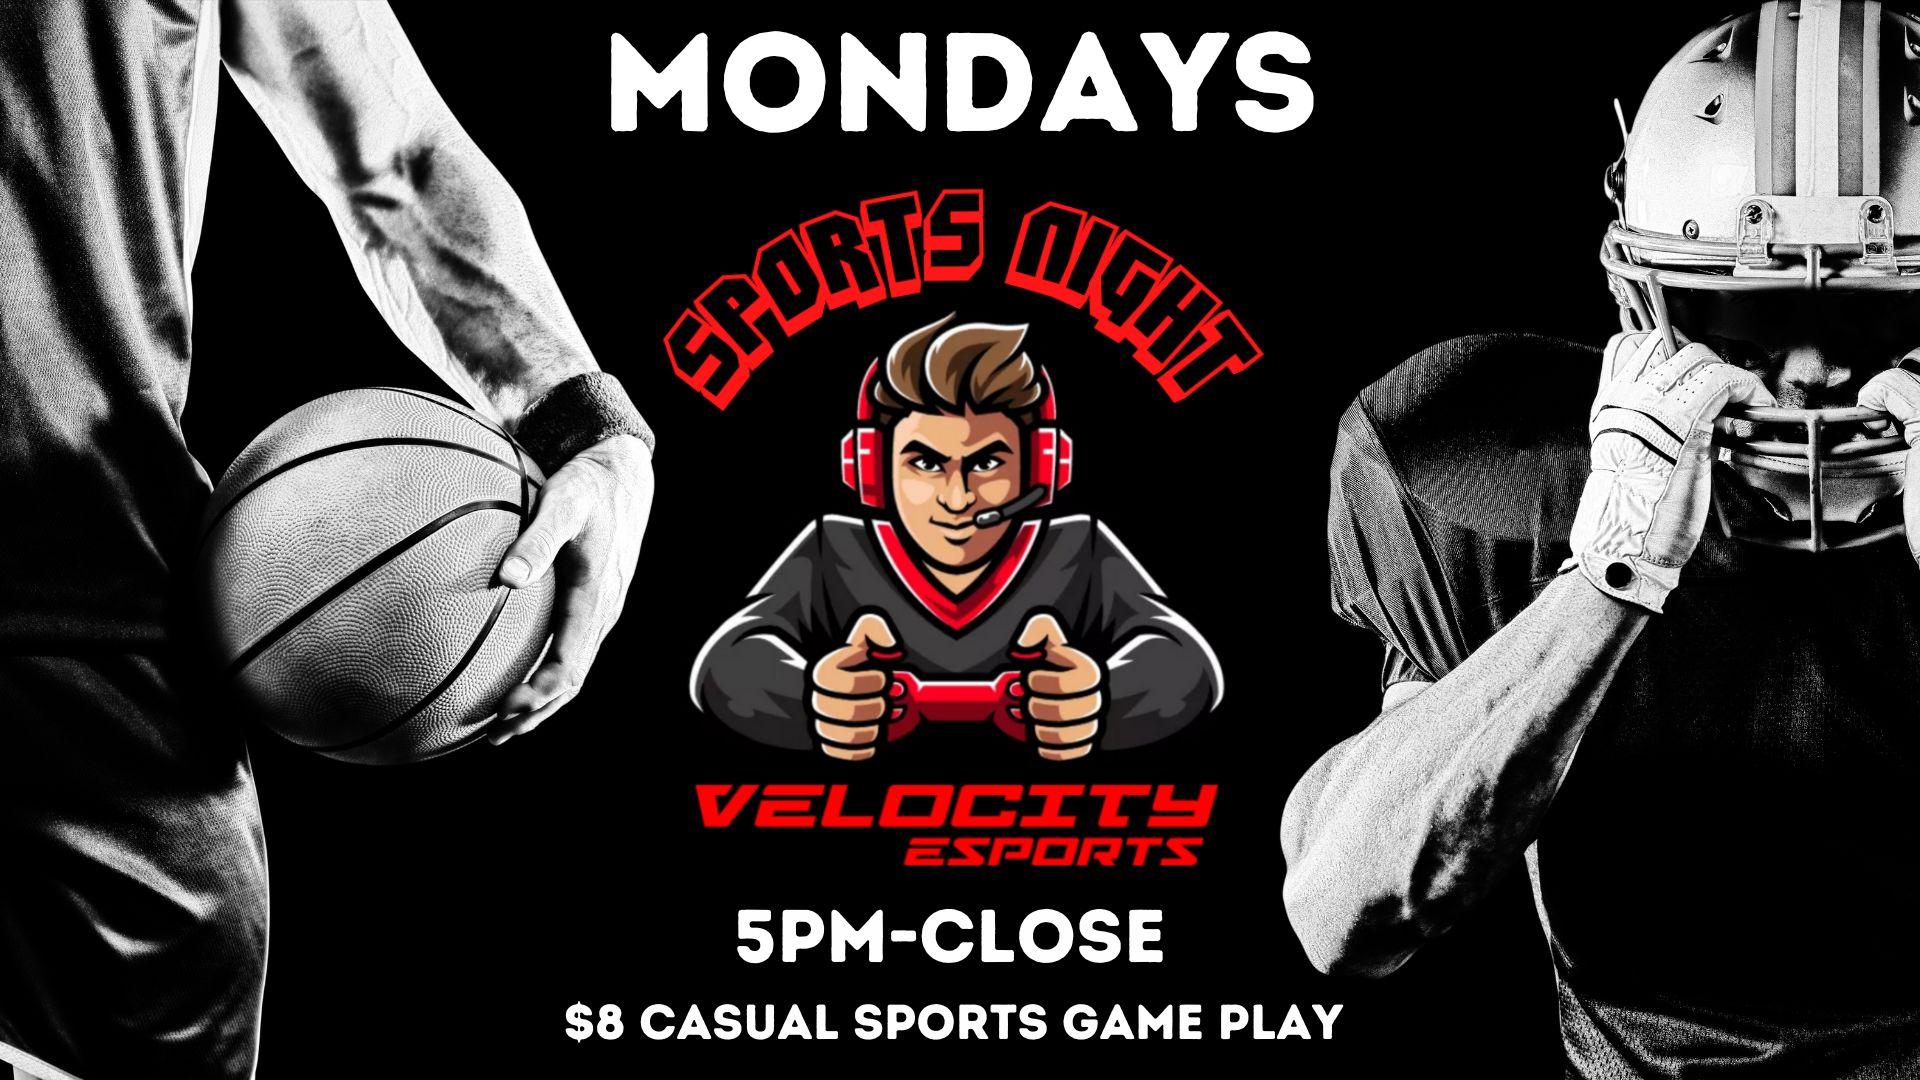 Arcade Bar Monday Sports Night